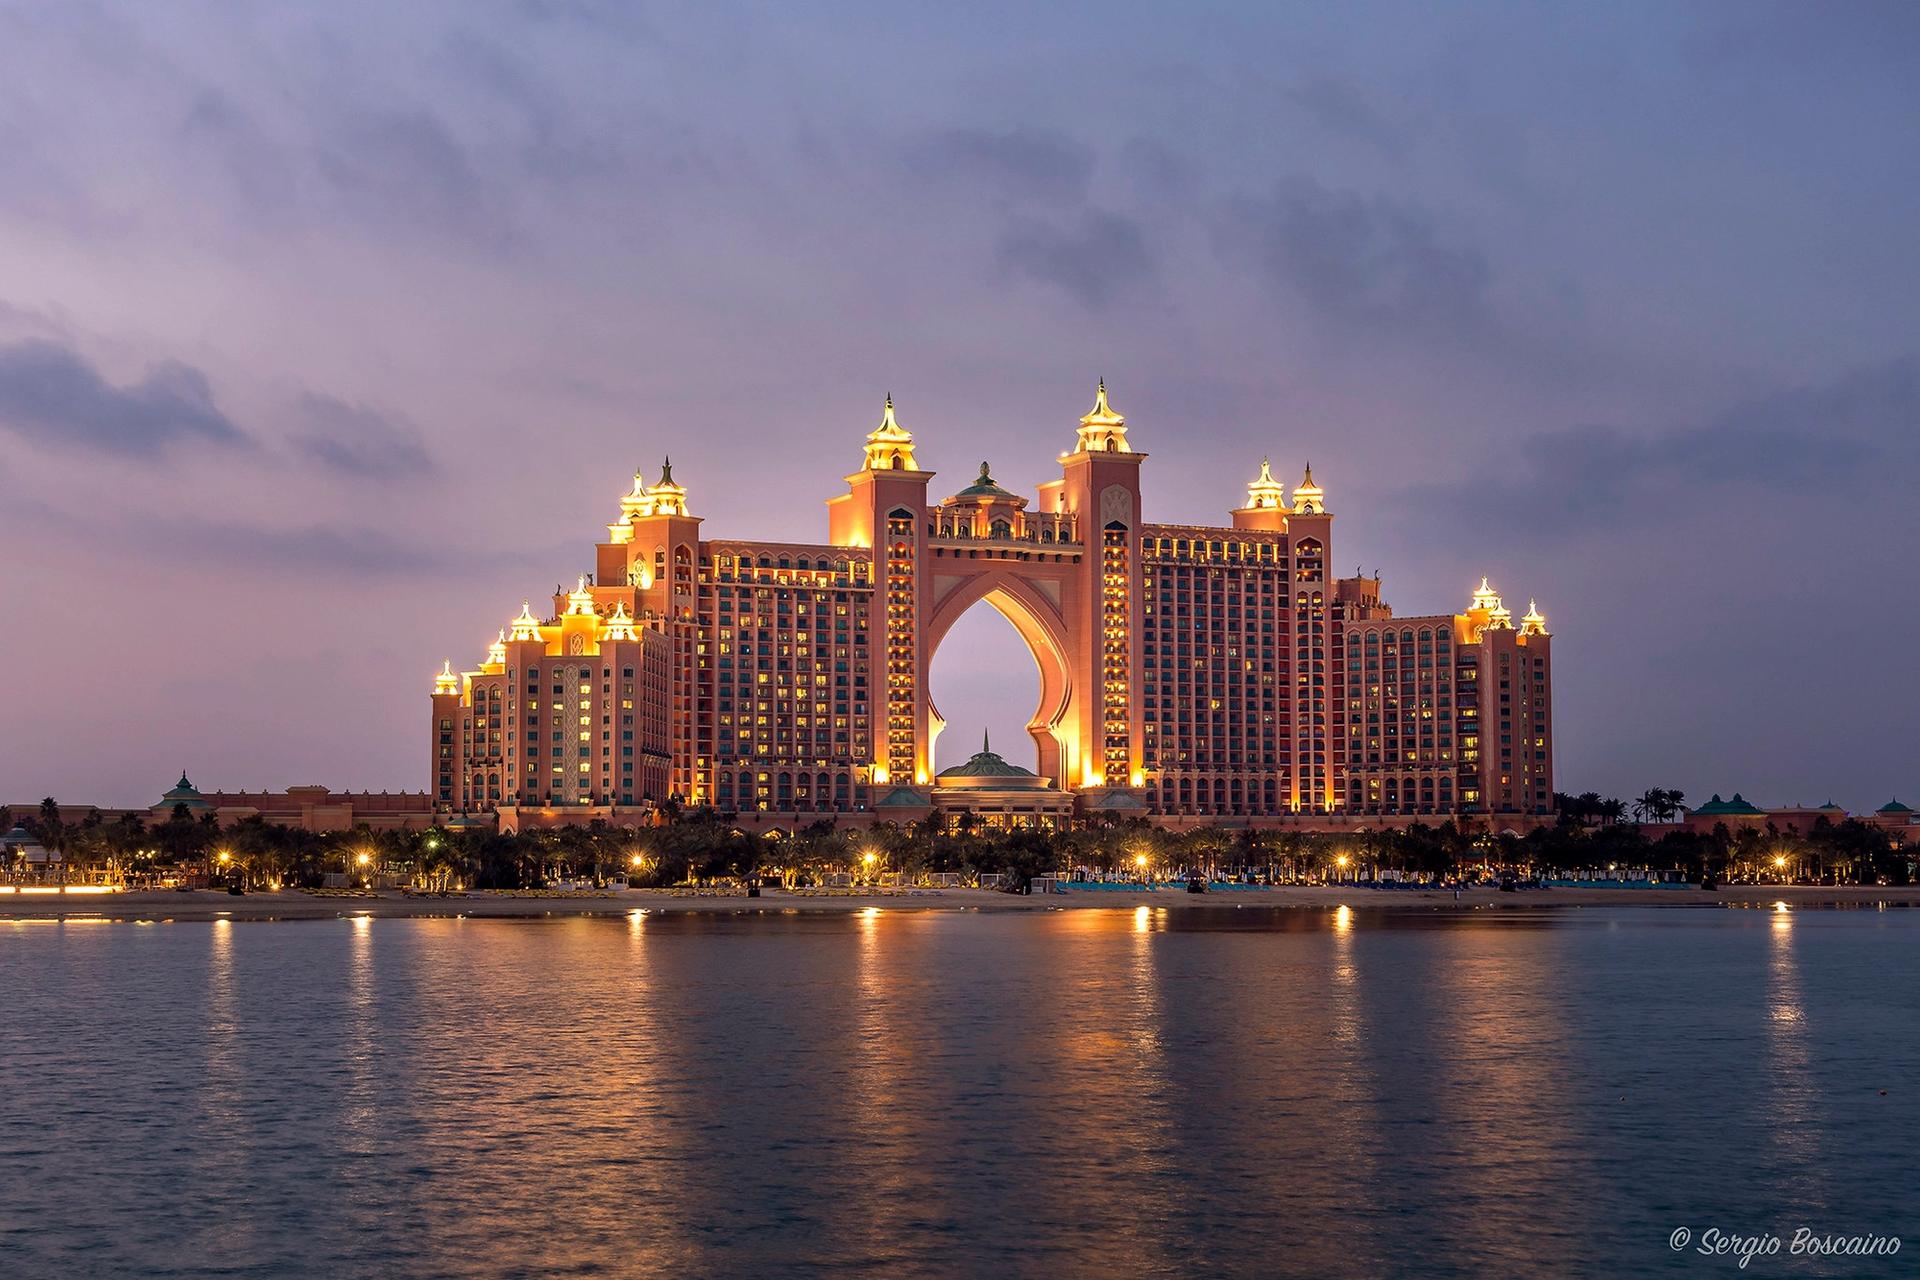 Hotel Atlantis, The Palm, Dubai Photo: Sergio Boscaino